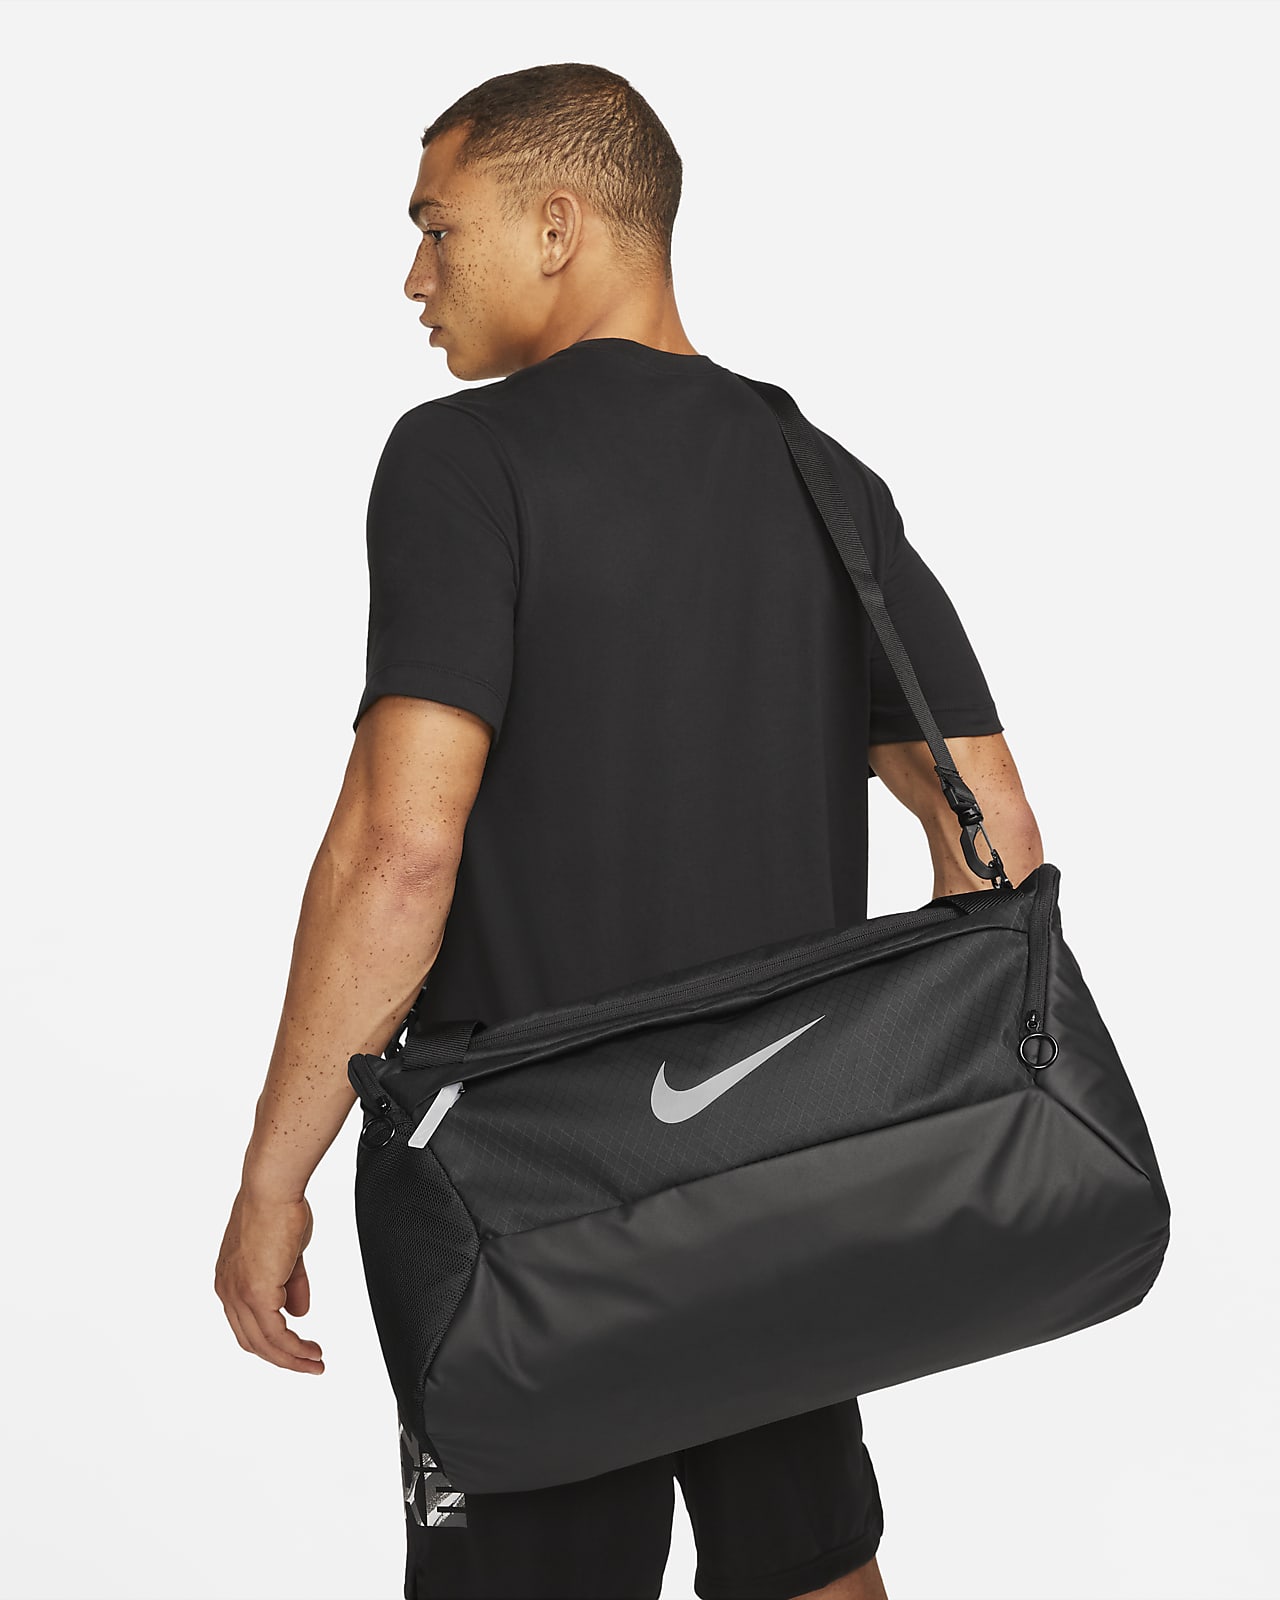 Nike Brasilia Winterized Training Duffel Bag (Small, 41L)